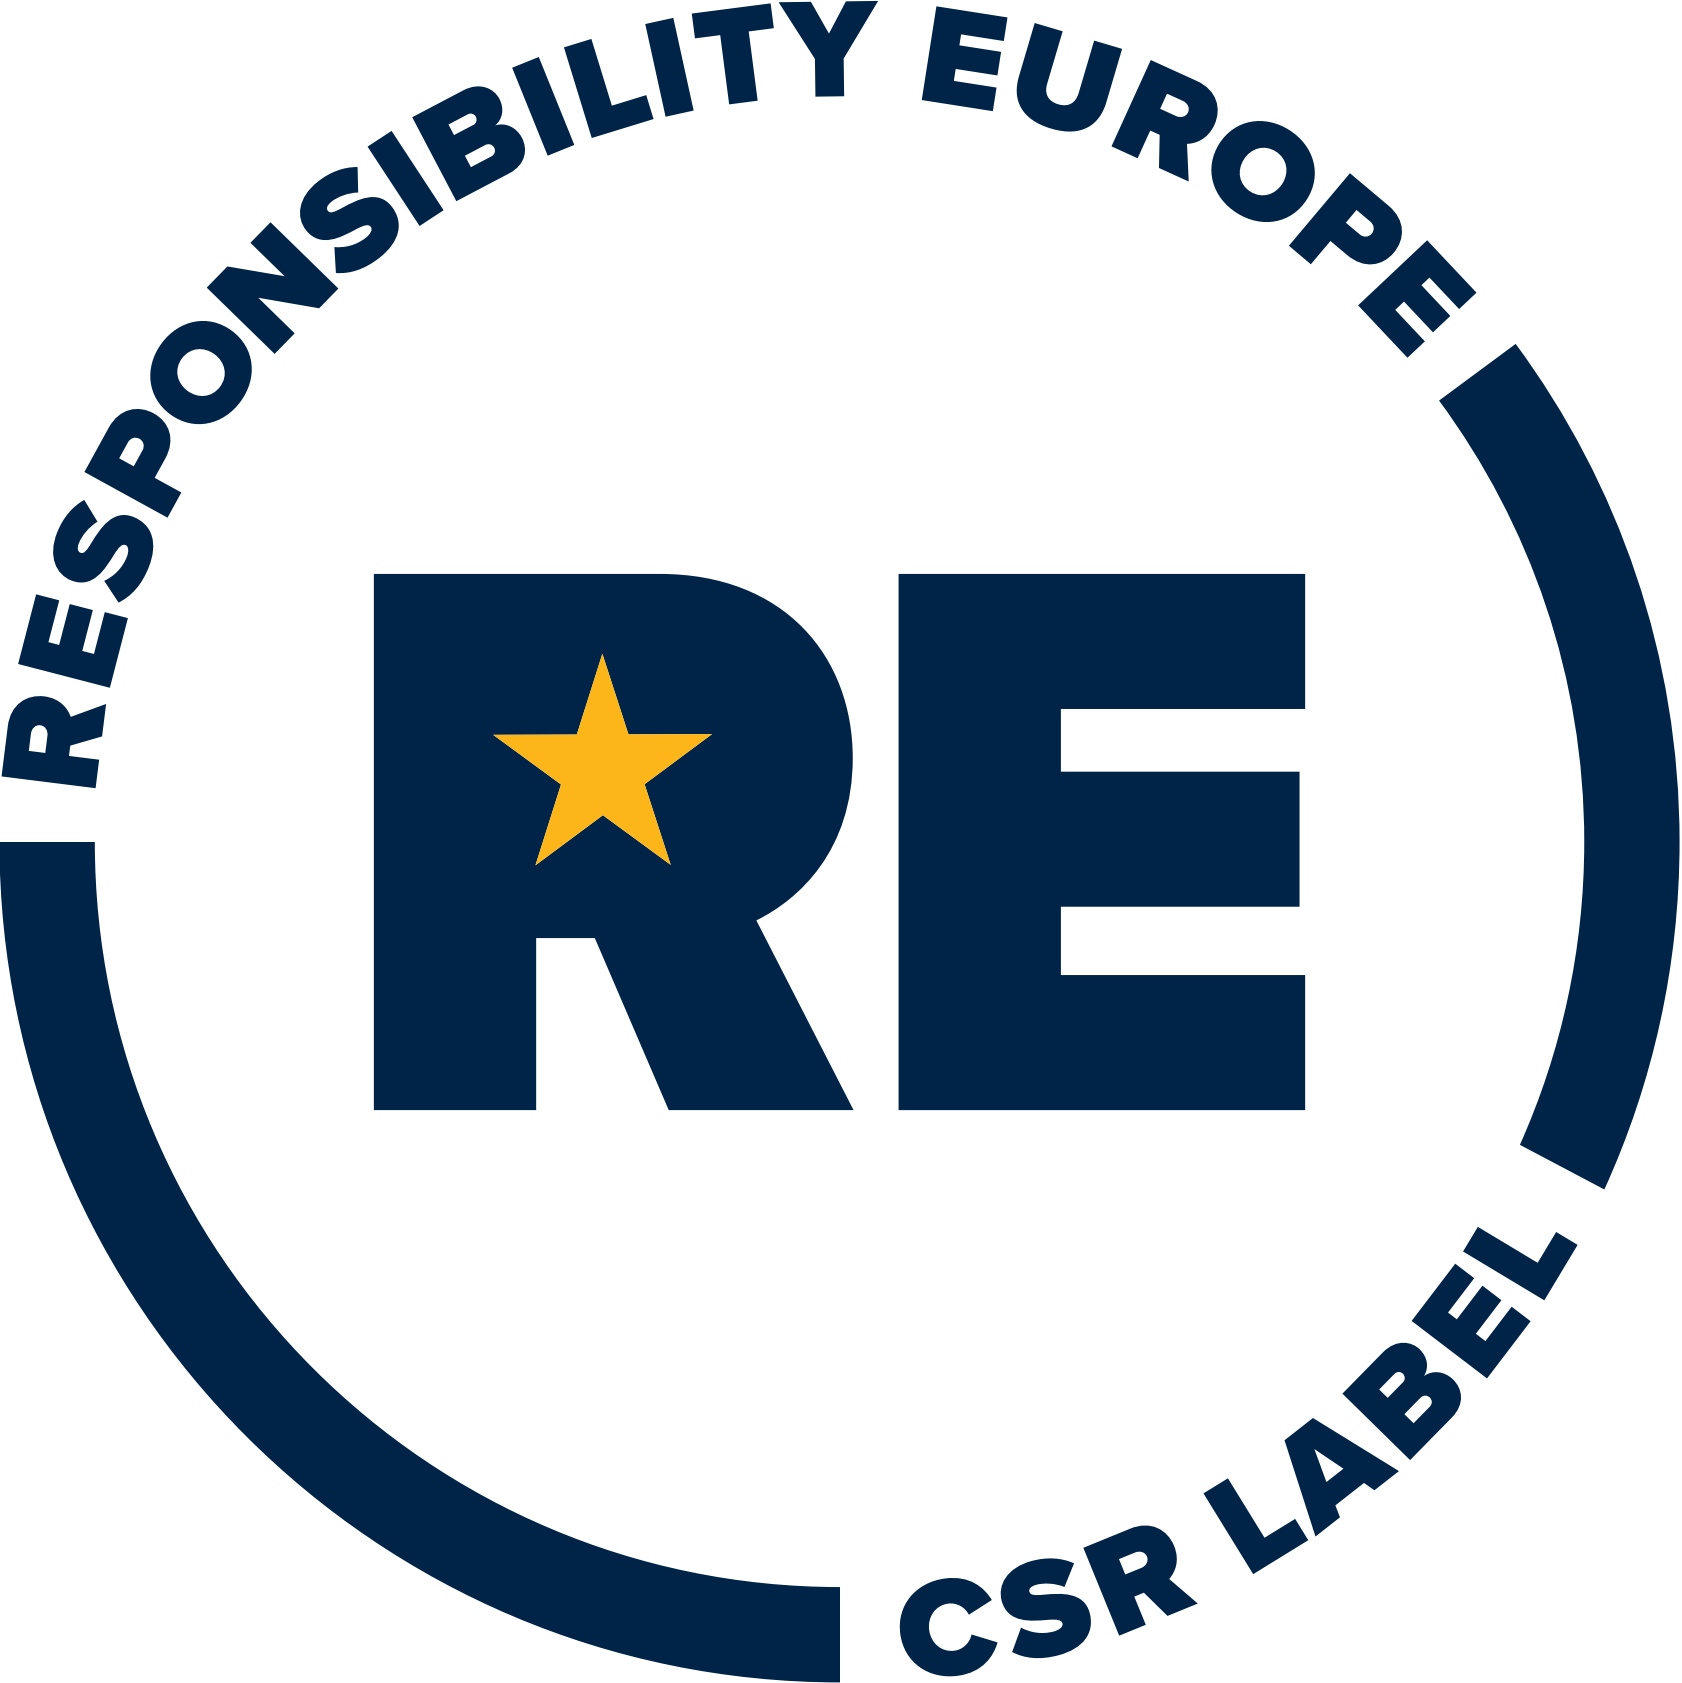 Responsibility Europe - logo